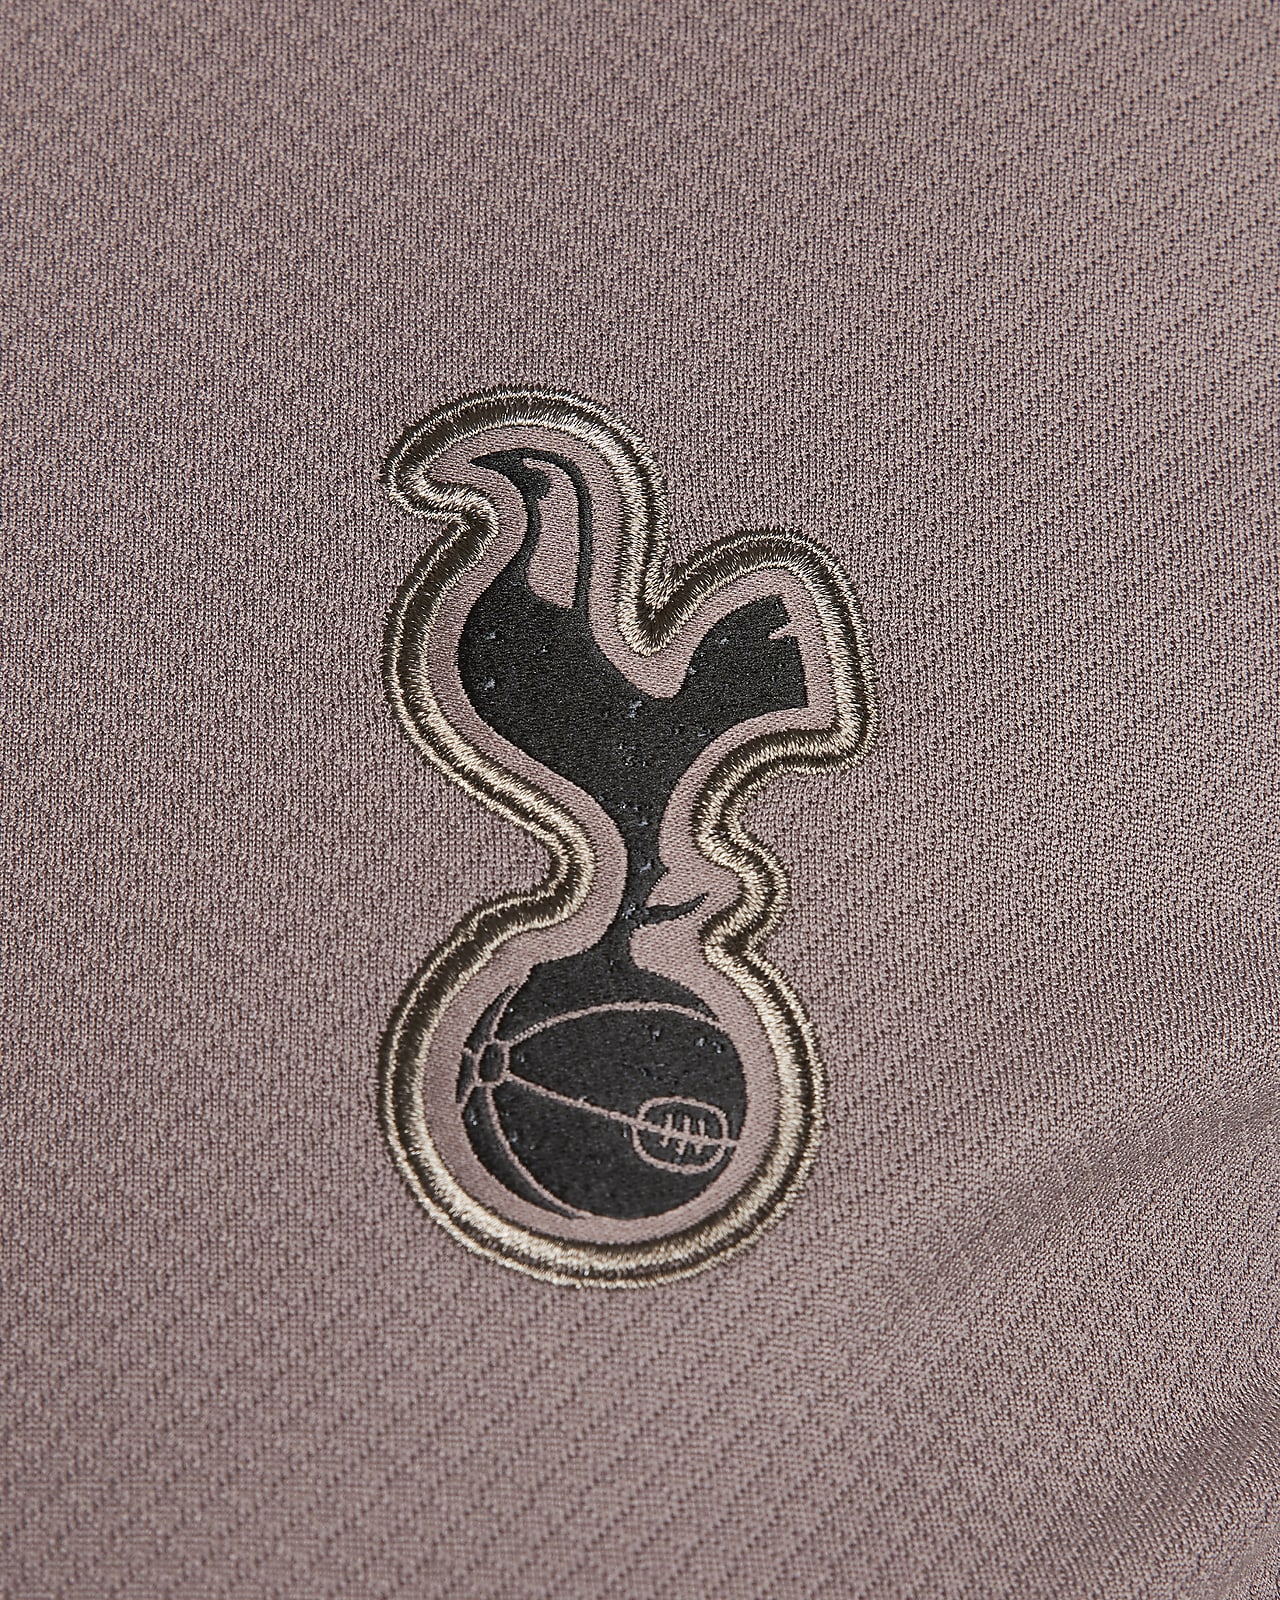 Tottenham Hotspur 2023/24 Stadium Third Women's Nike Dri-FIT Football Shirt